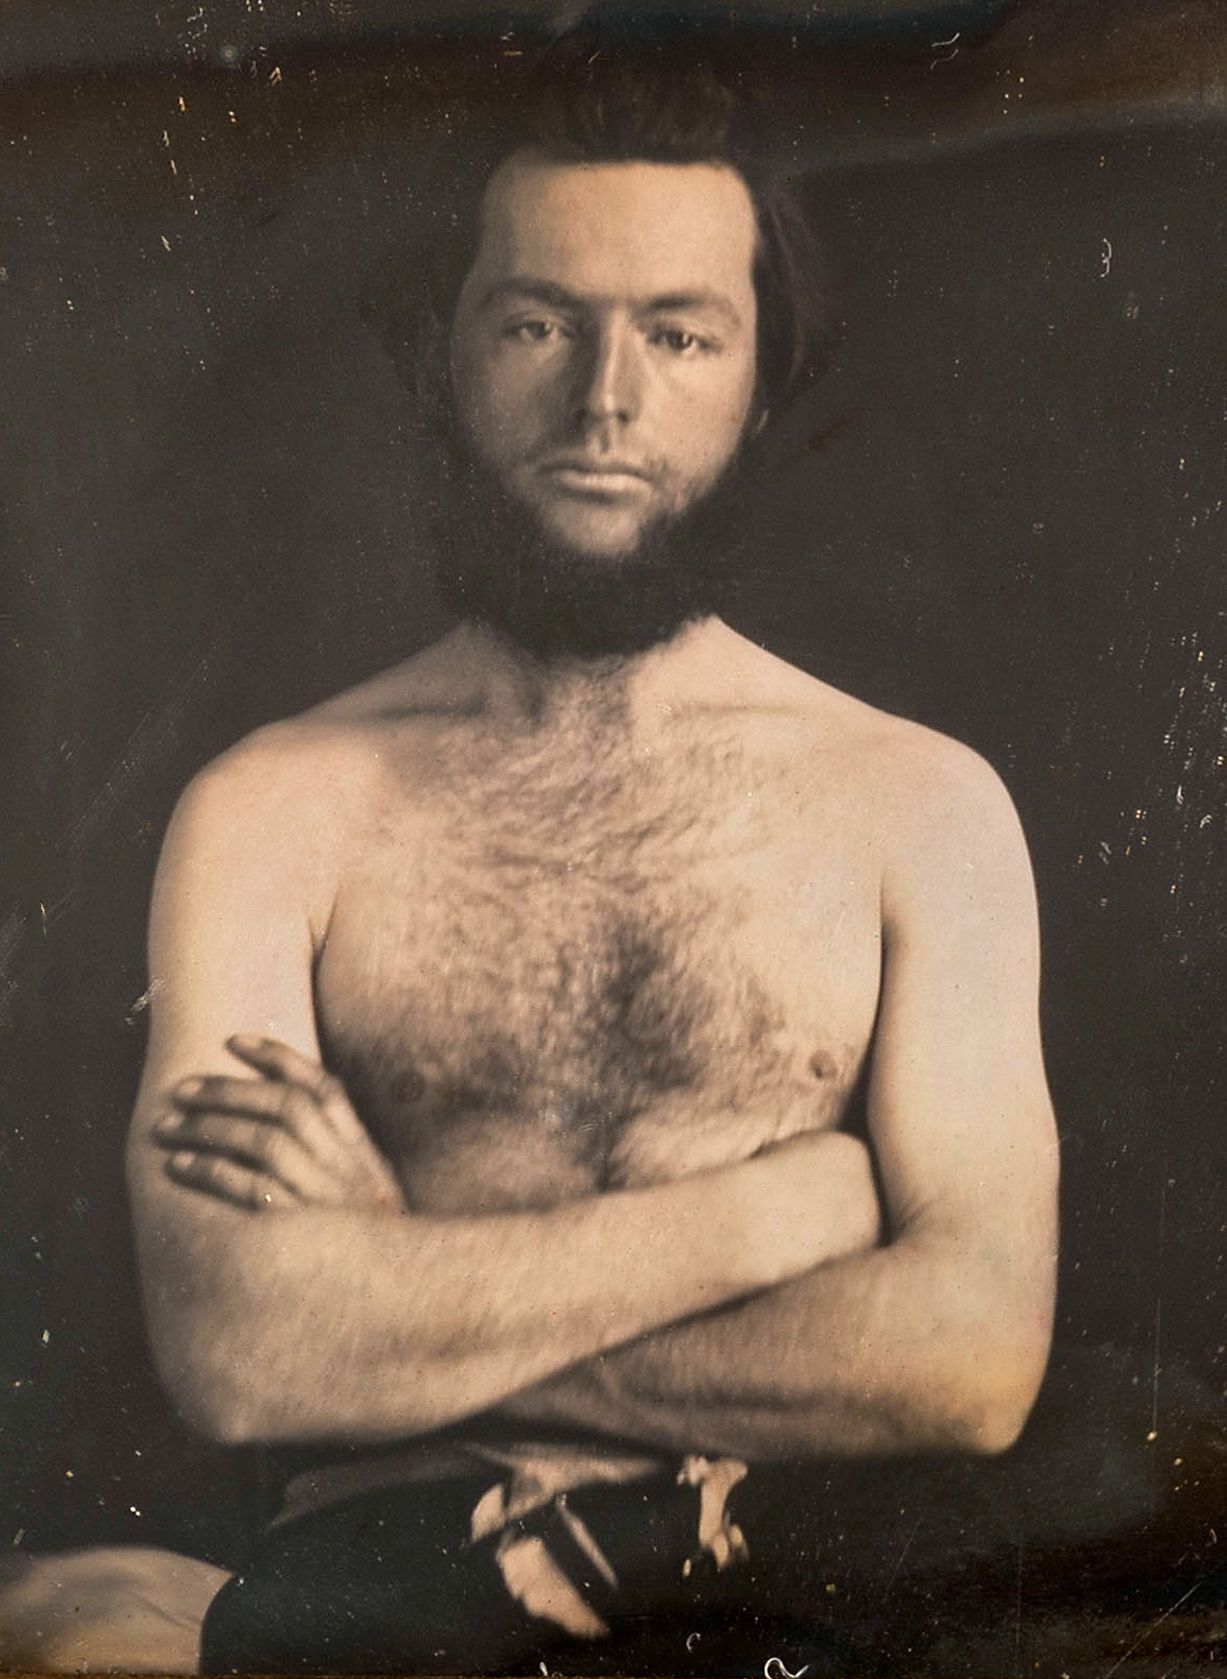 John Morrissey, from a daguerreotype photograph, ca. 1850s (public domain image)